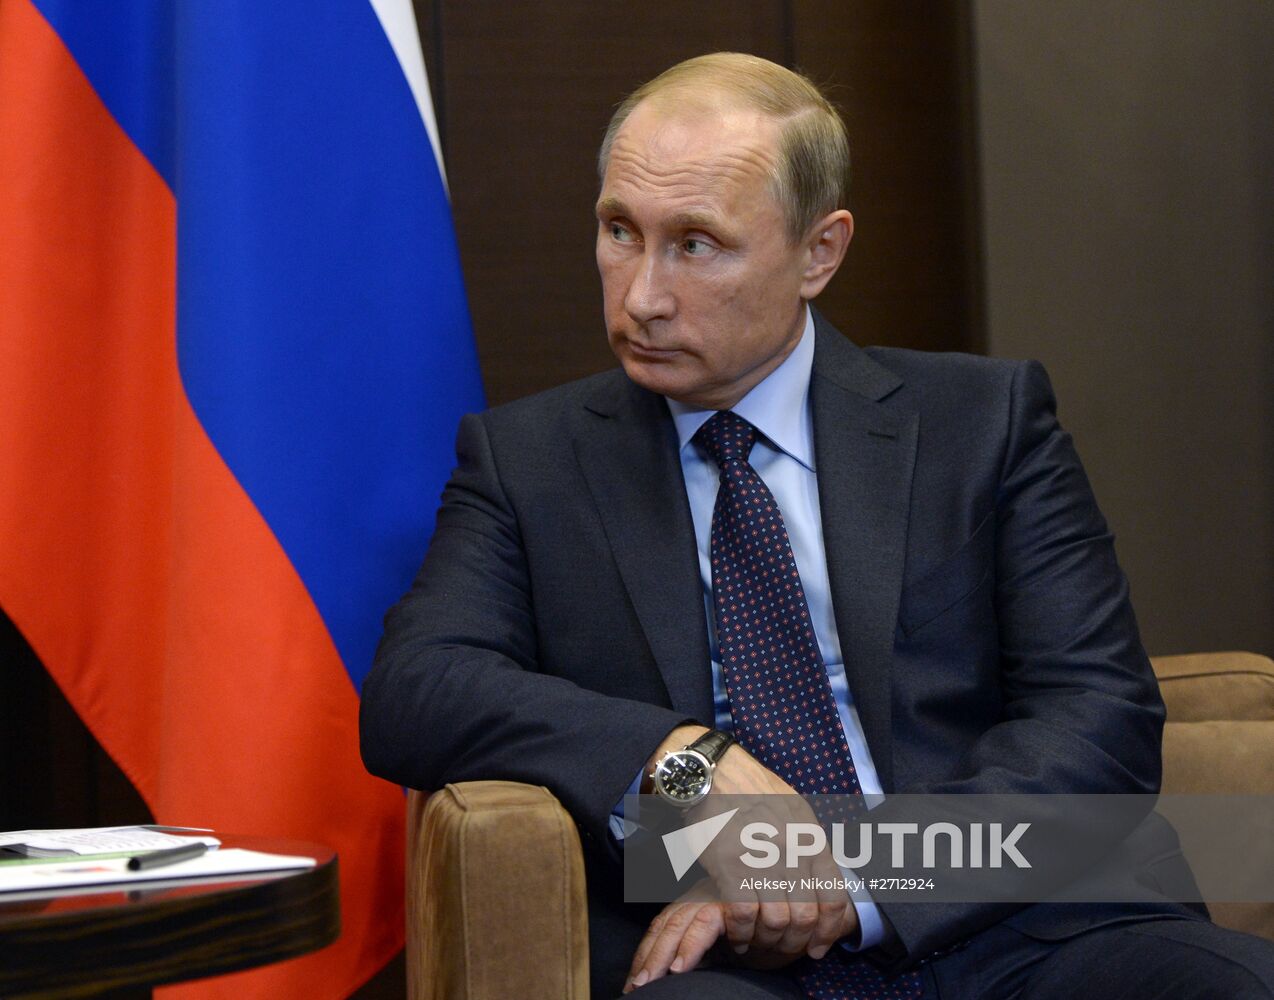 President Vladimir Putin meets with Luxembourg's Prime Minister Xavier Bettel